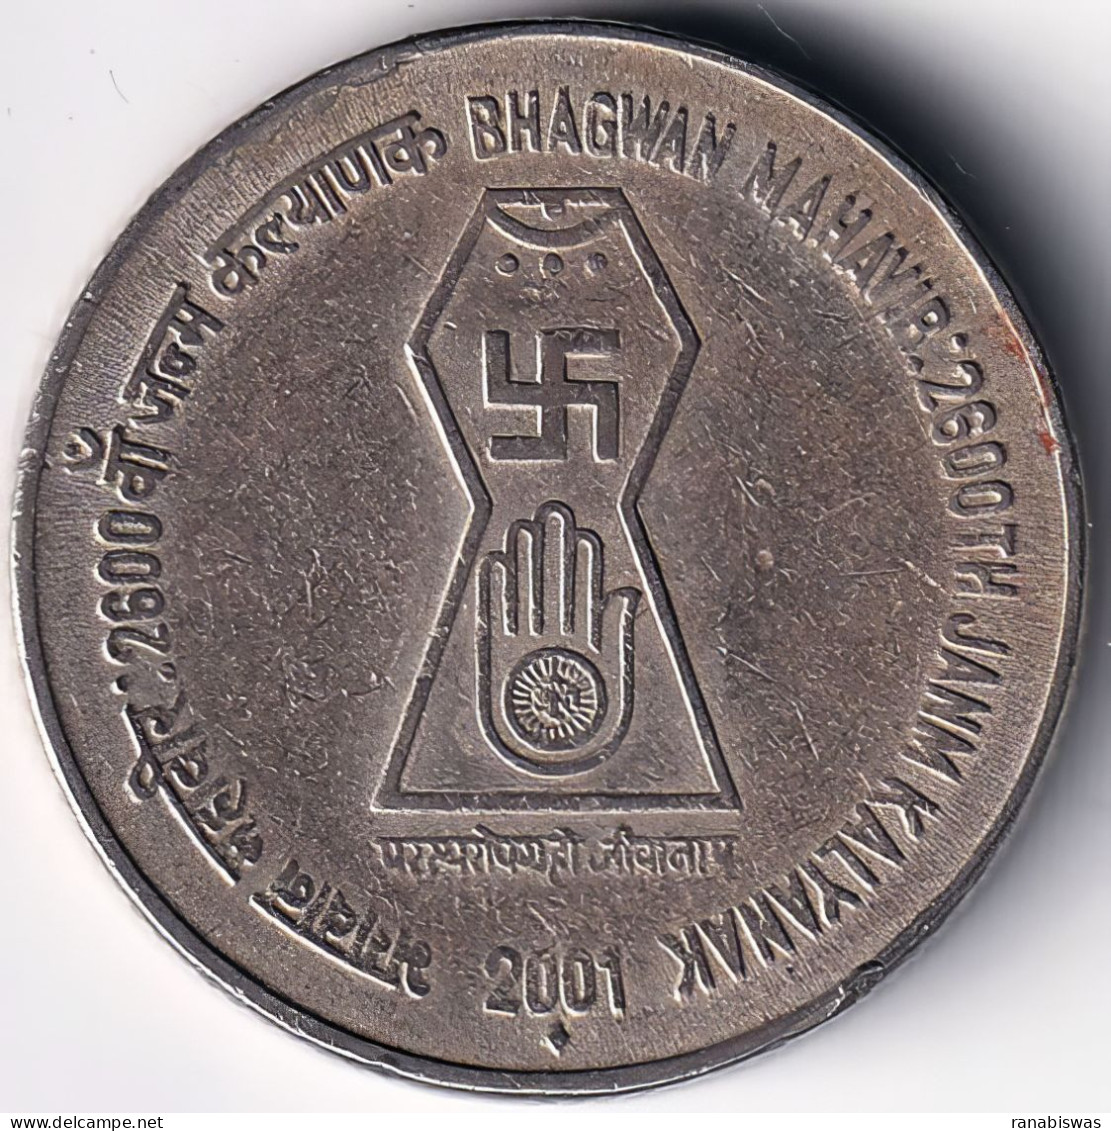 INDIA COIN LOT 132, 5 RUPEES 2001, BHAGAWAN MAHAVIR, BOMBAY MINT, AUNC, SCARE - India